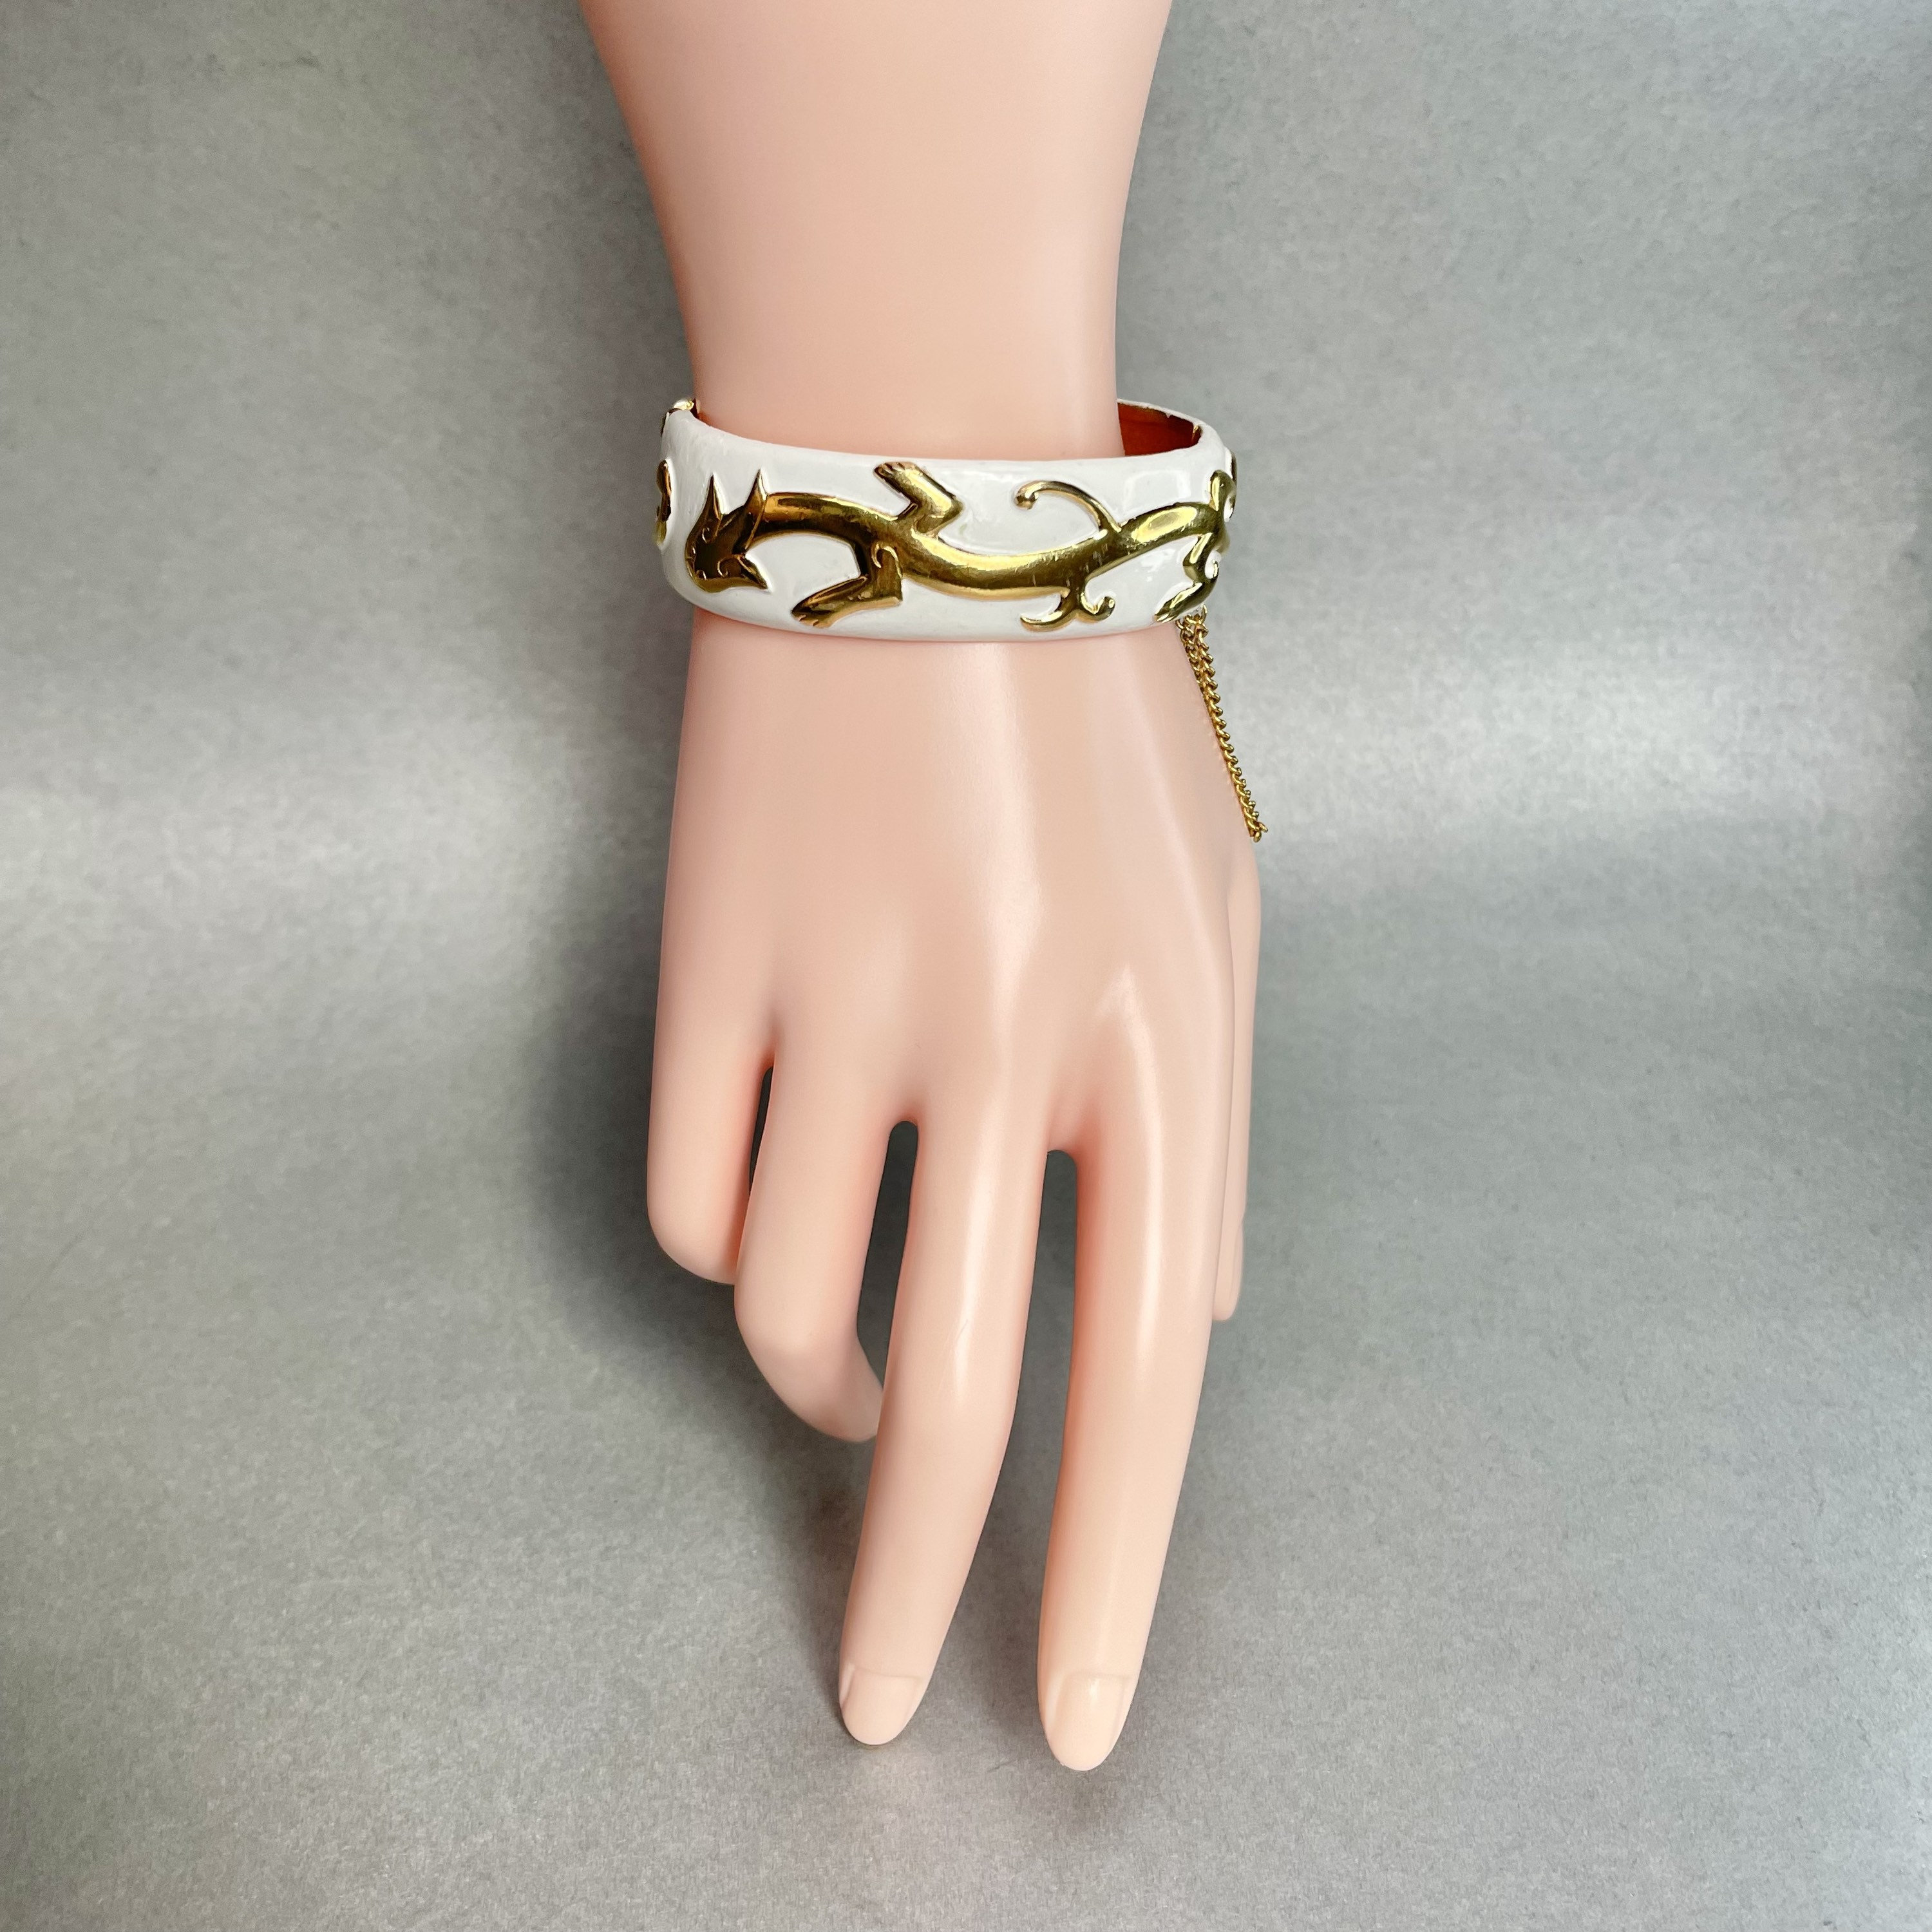 The Hunger Games Mockingjay Leather Charm Bangle Bracelet - 8 Colors | Wish